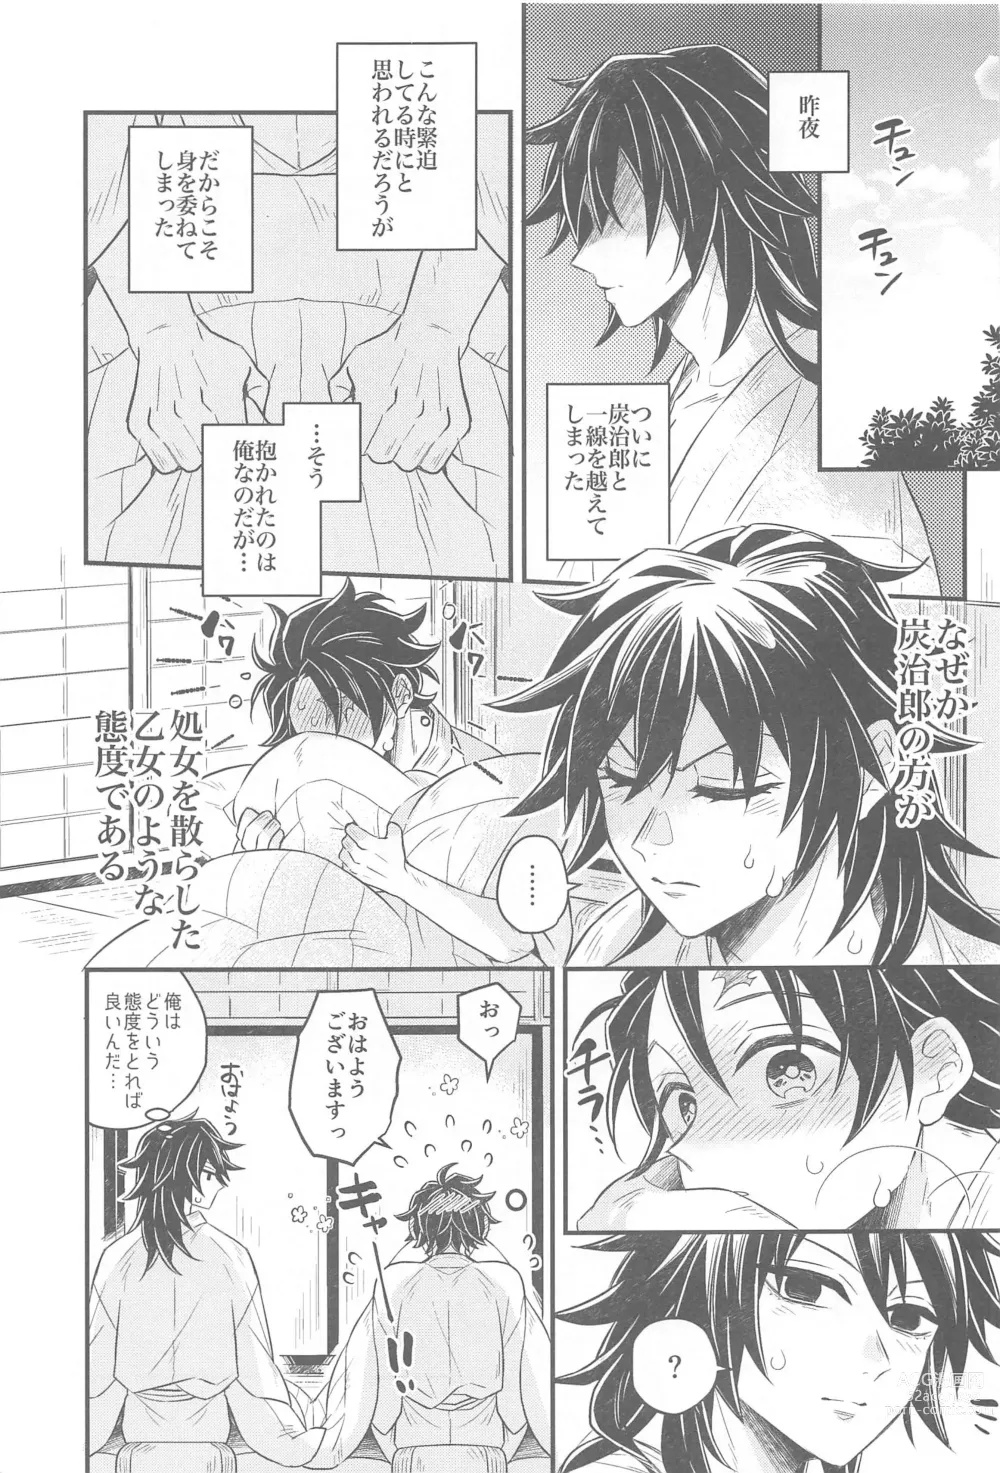 Page 2 of doujinshi Shoya no Yokuasa - the morning after the first night